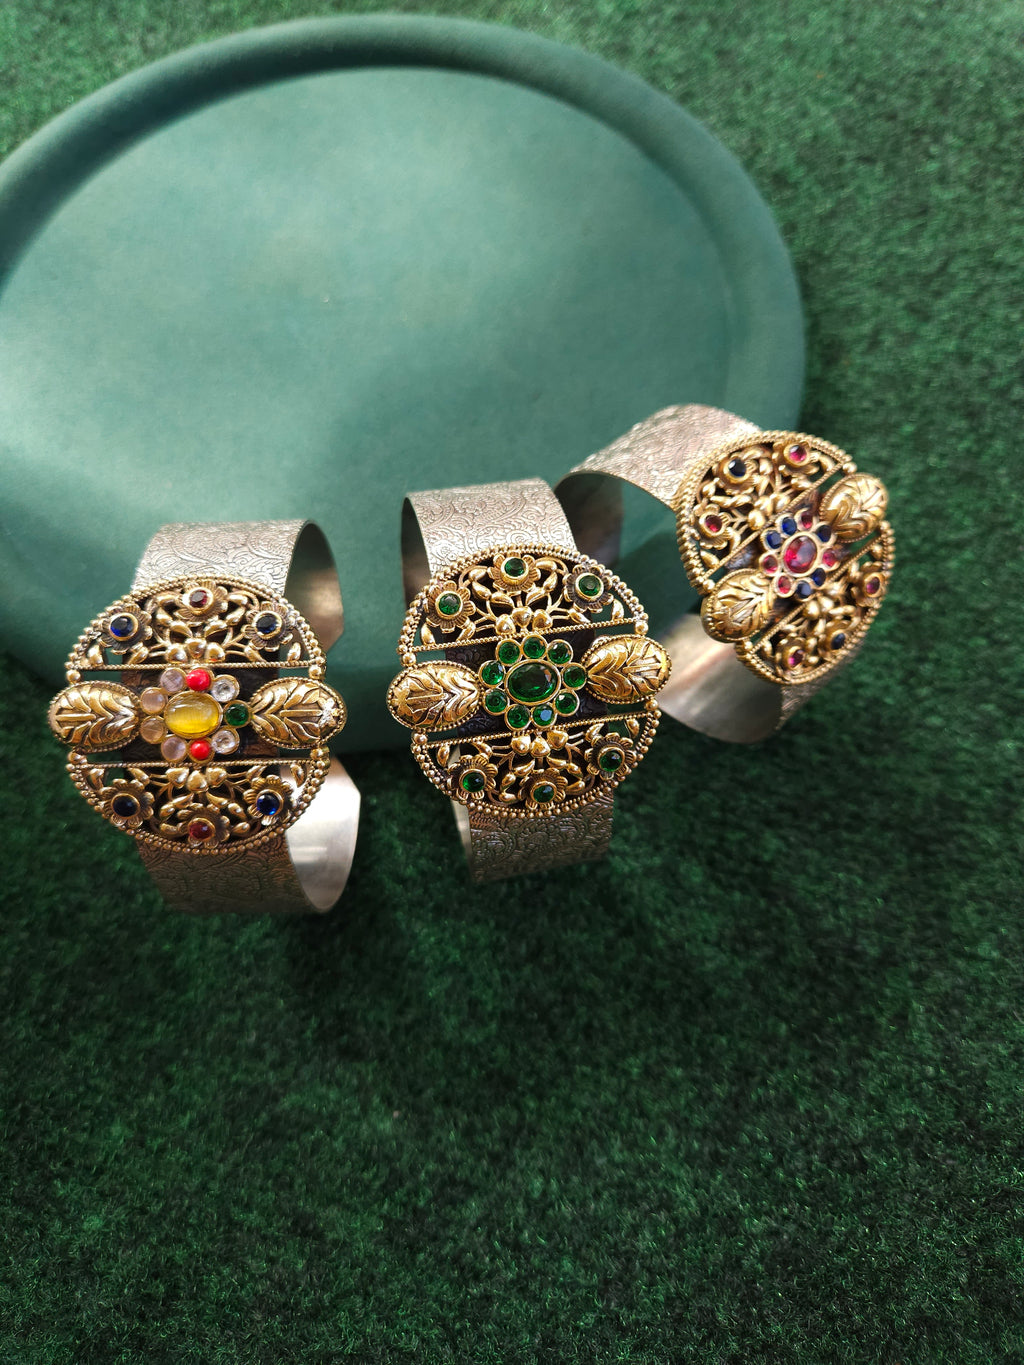 Dualtone silveralike bracelet (price for 1 bangle)